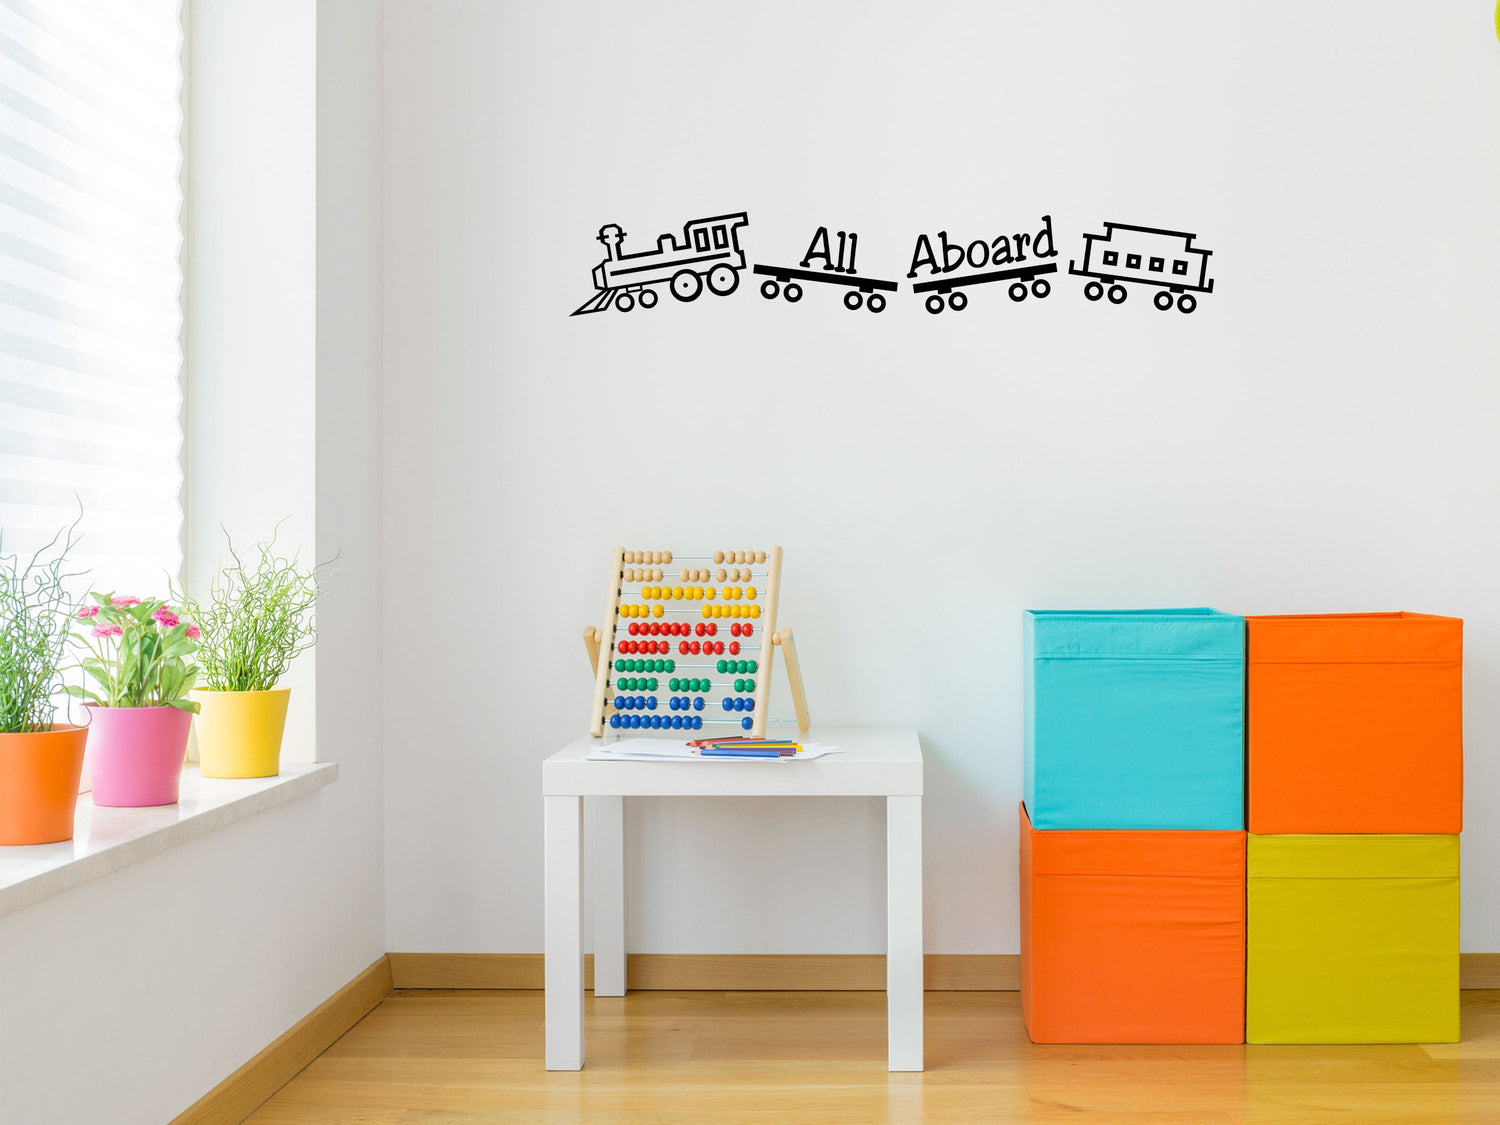 Boys Room Train Wall Stickers - Inspirational Wall Decals Vinyl Wall Decal Inspirational Wall Signs 